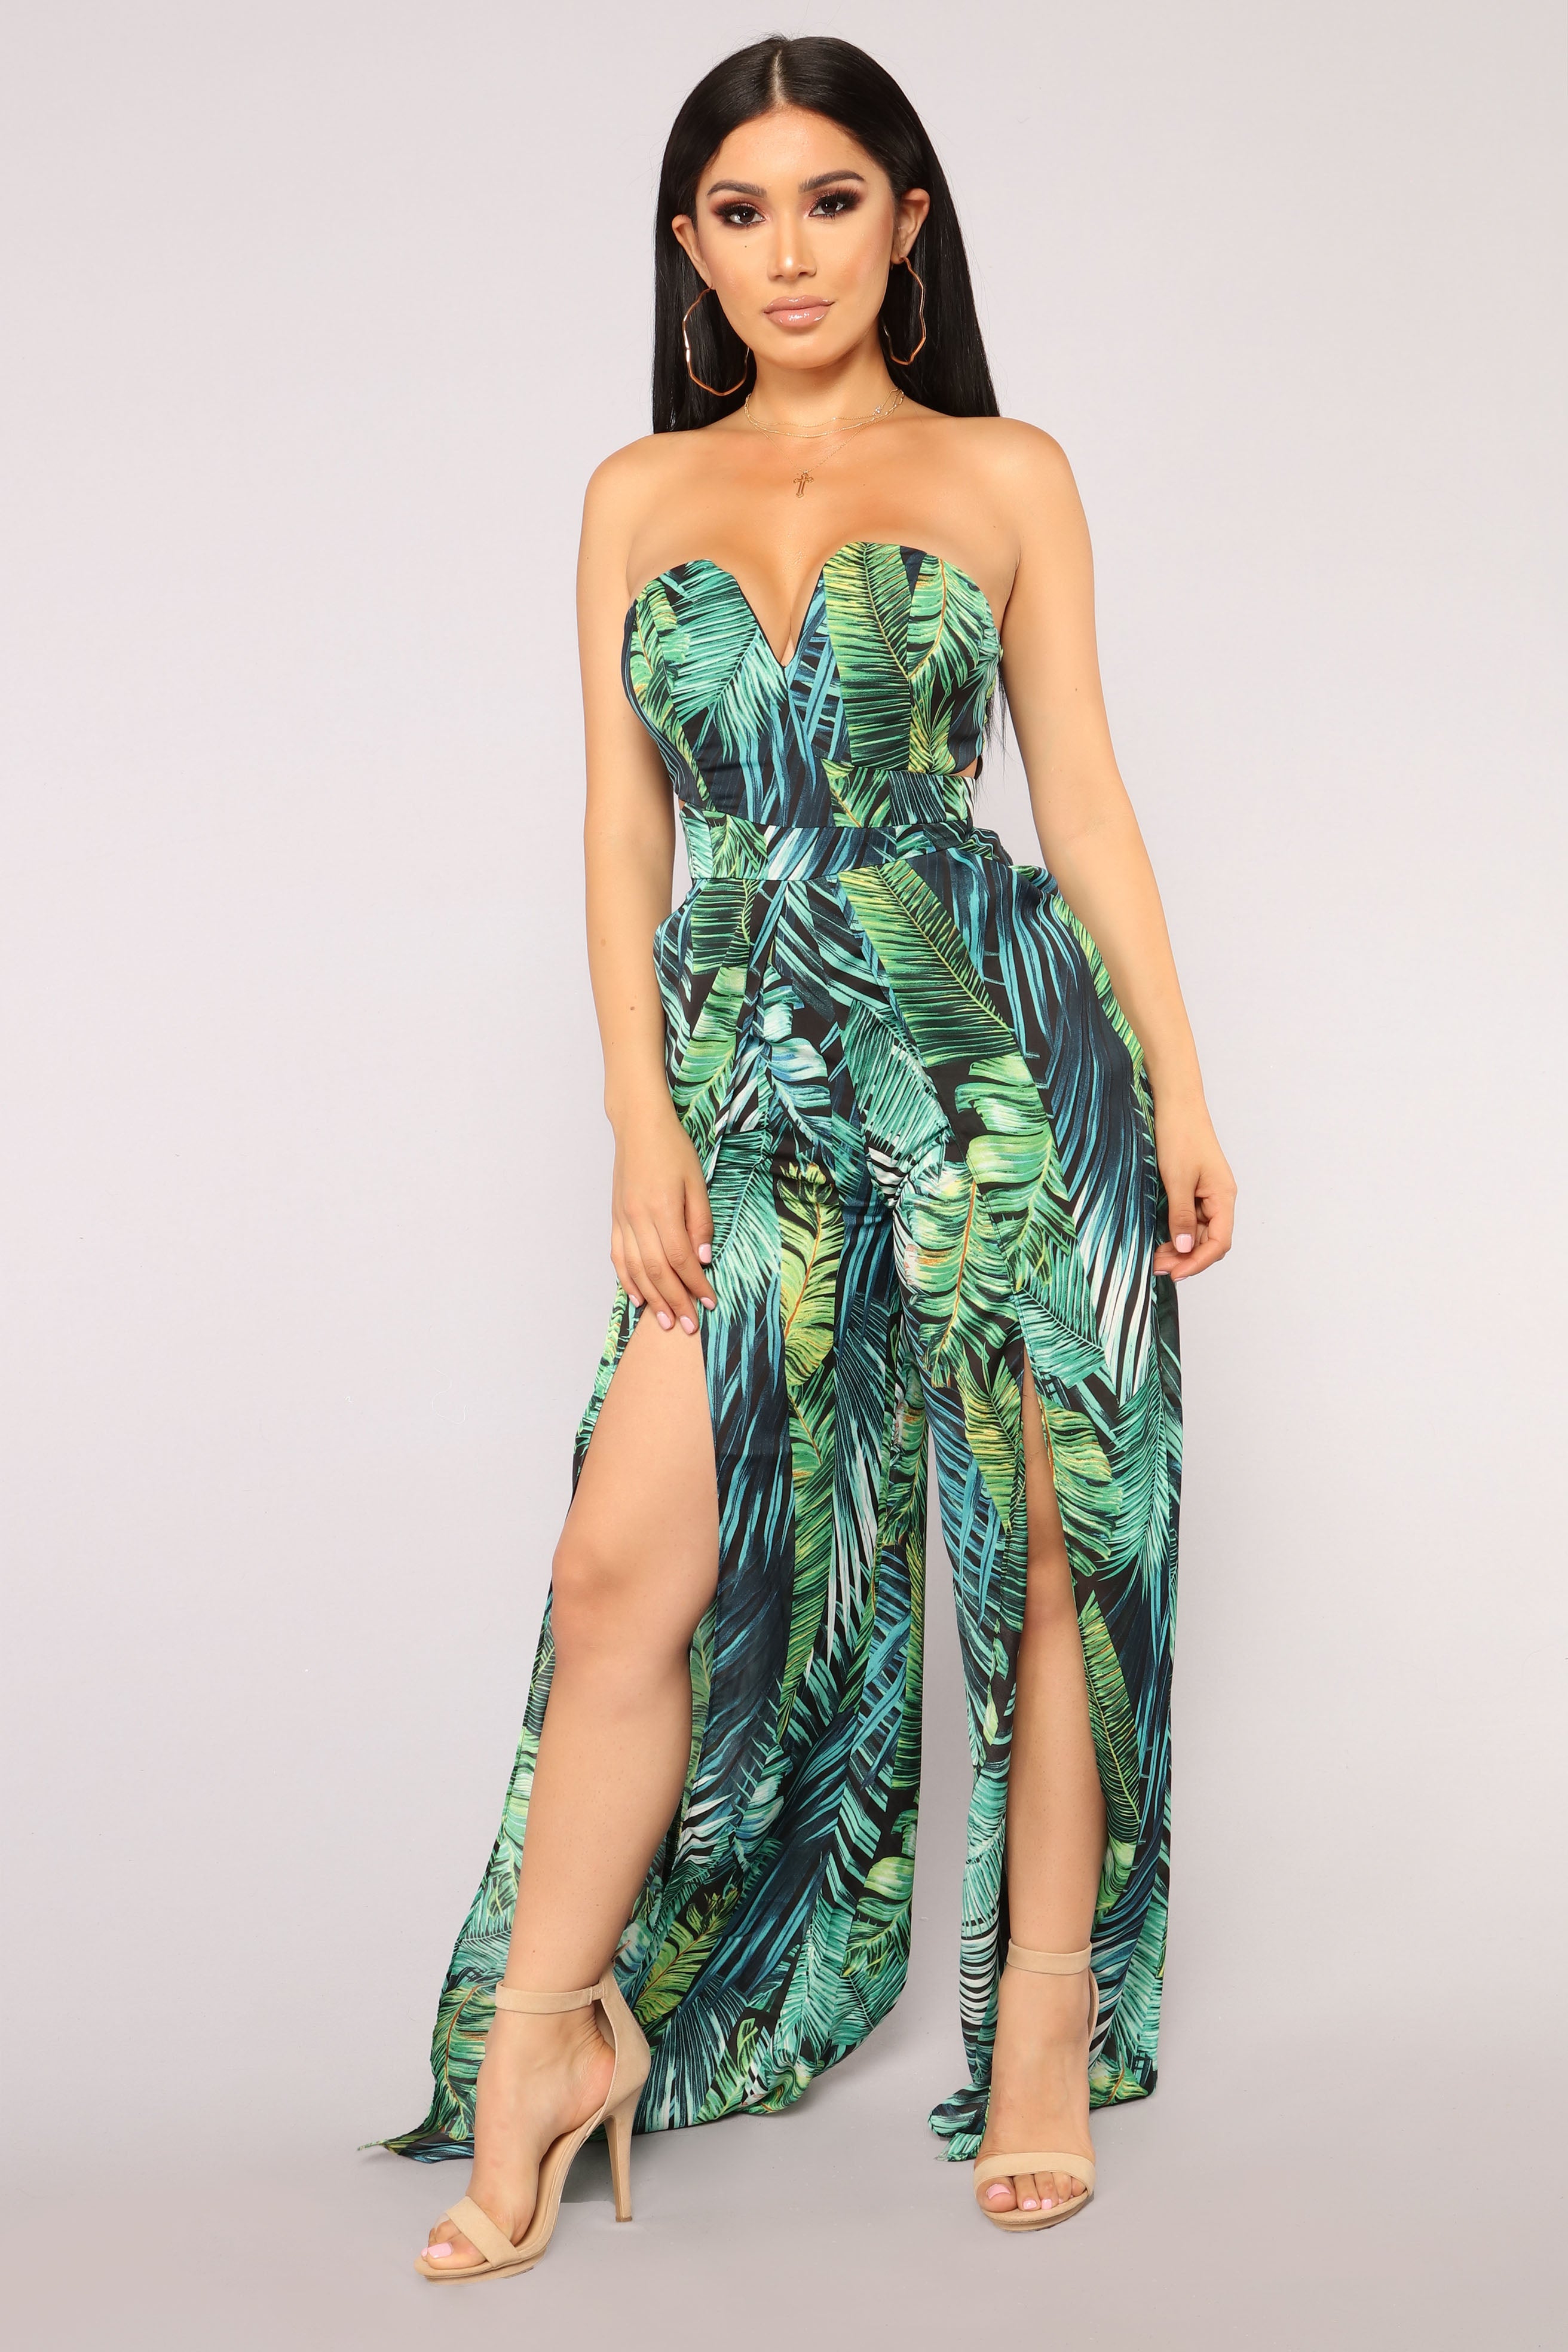 fashion nova tropical dress